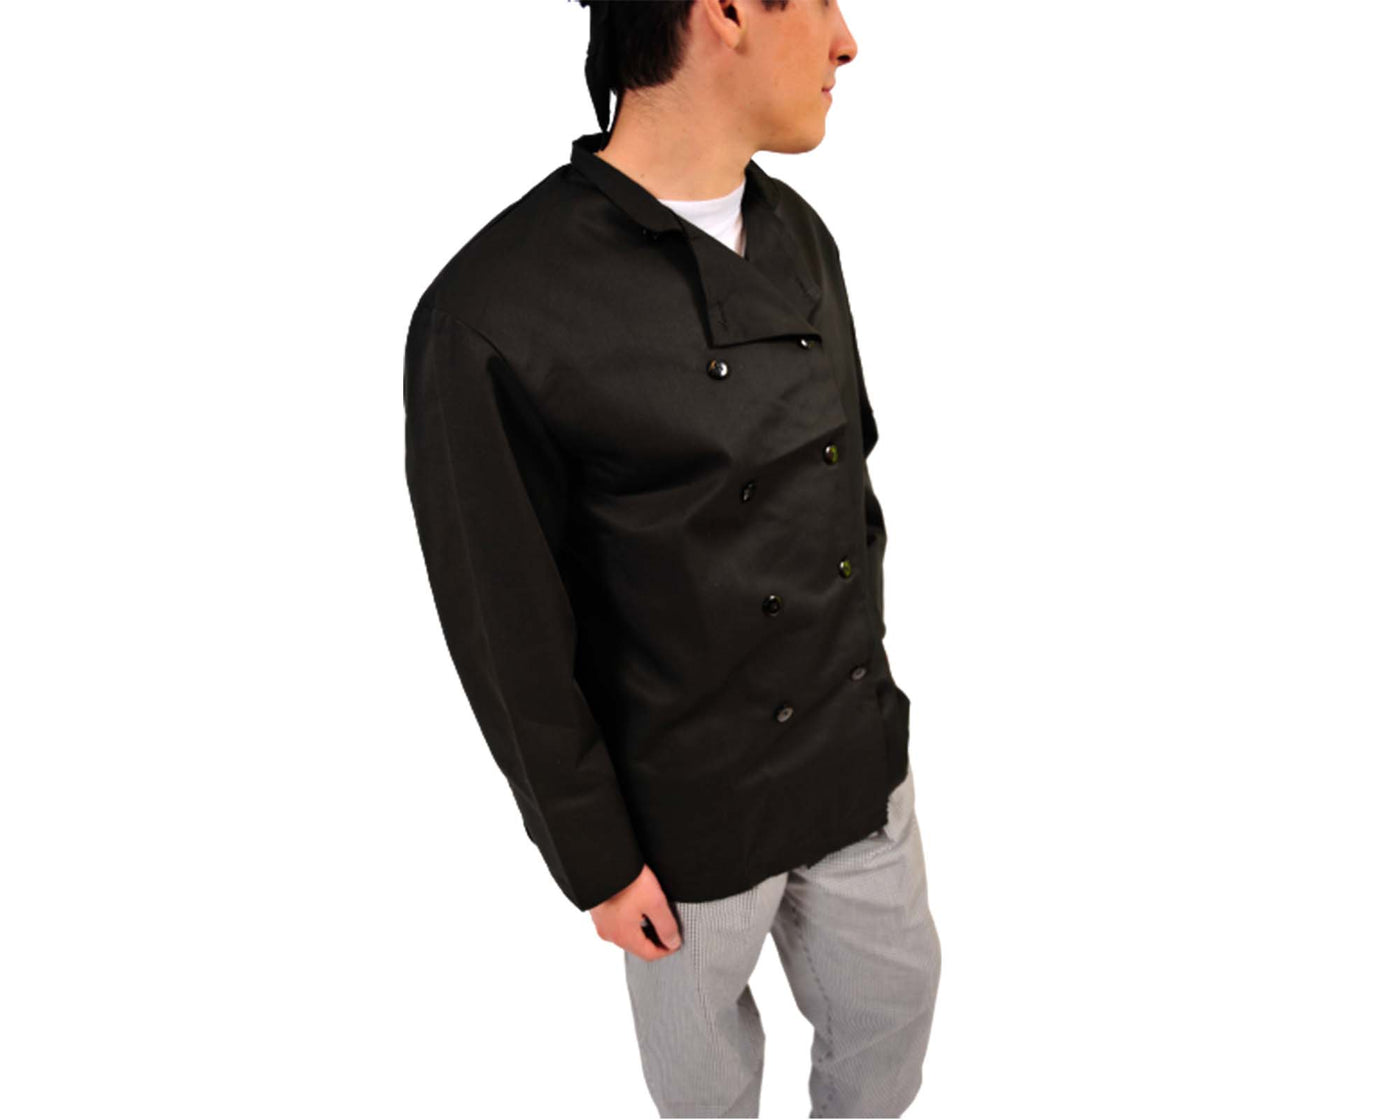 man wearing black chef coat with mesh underarm